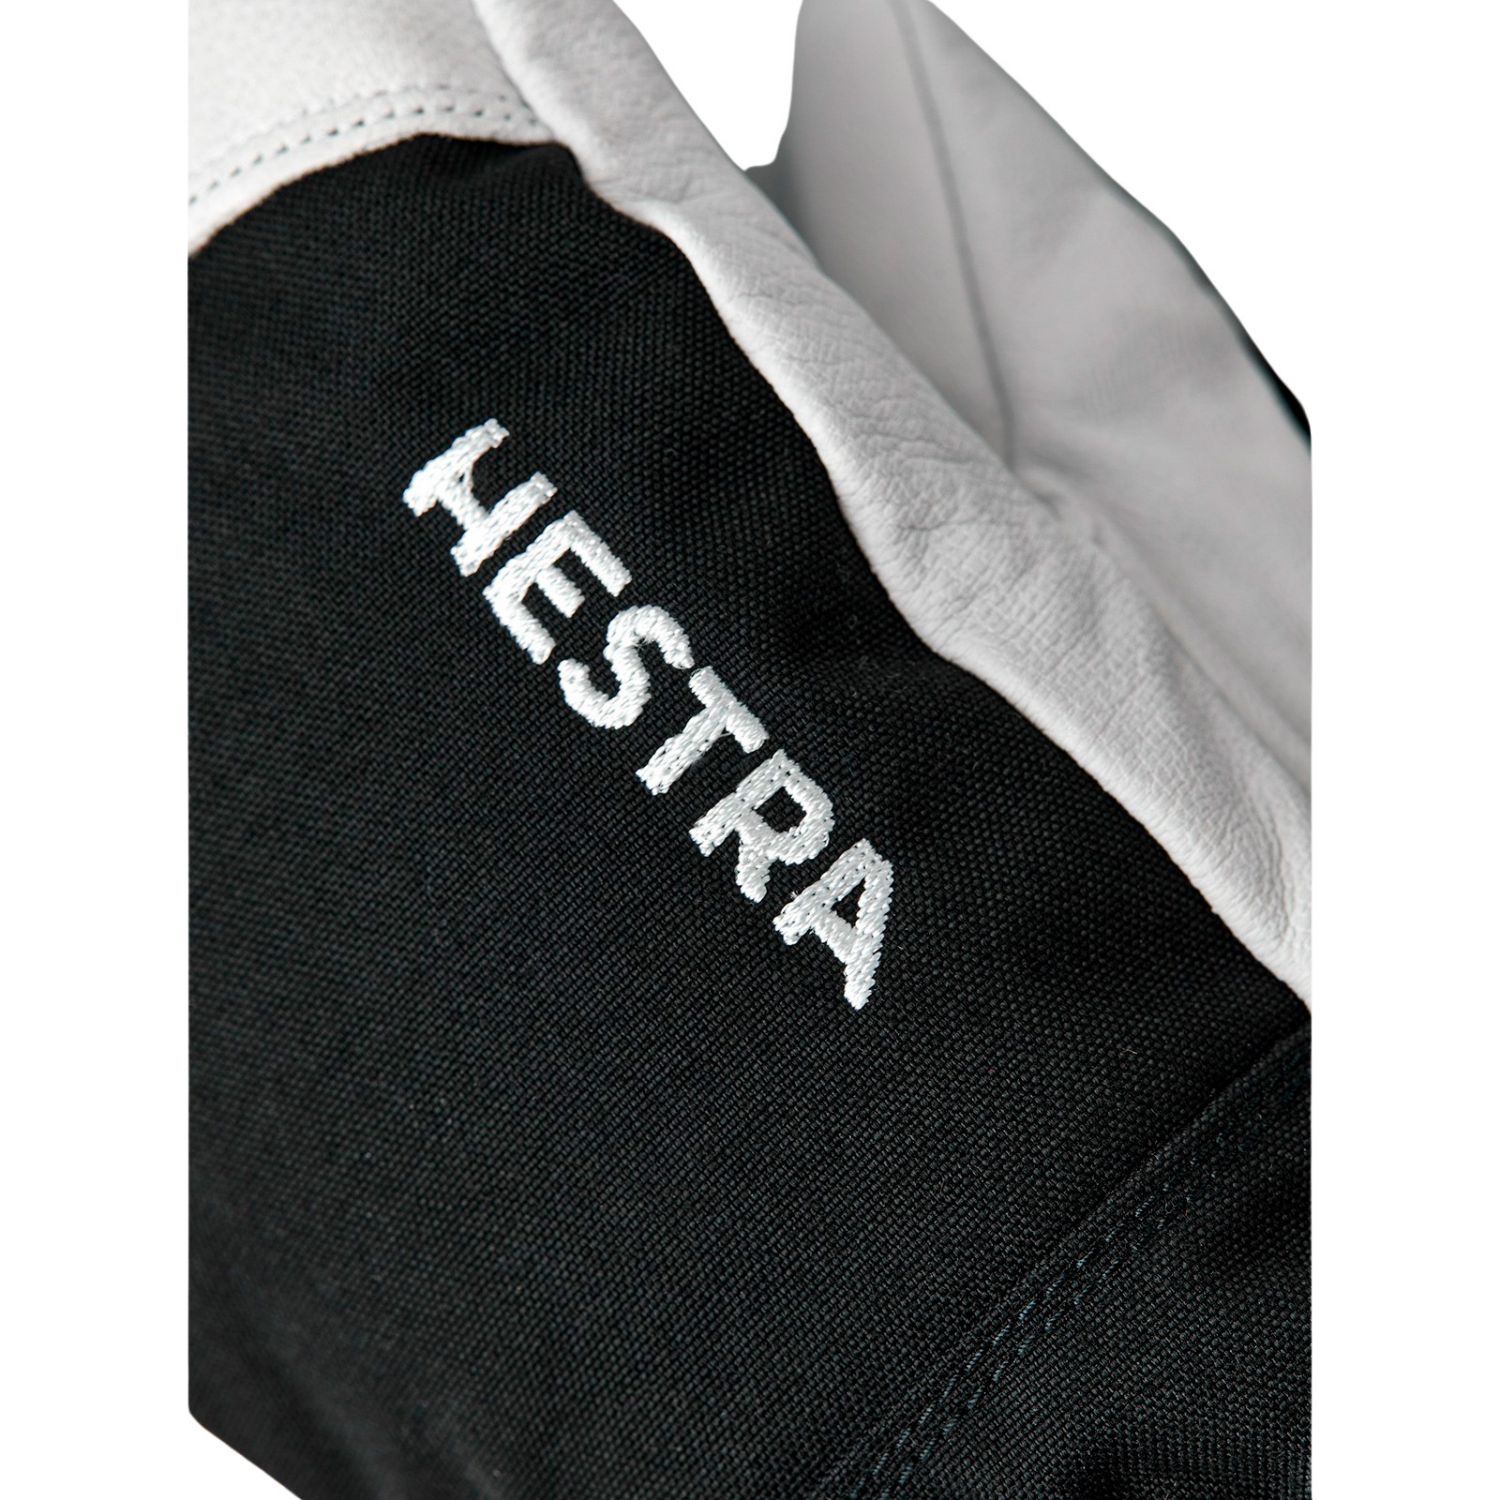 Hestra Army Leather Heli skiluffer, junior, sort